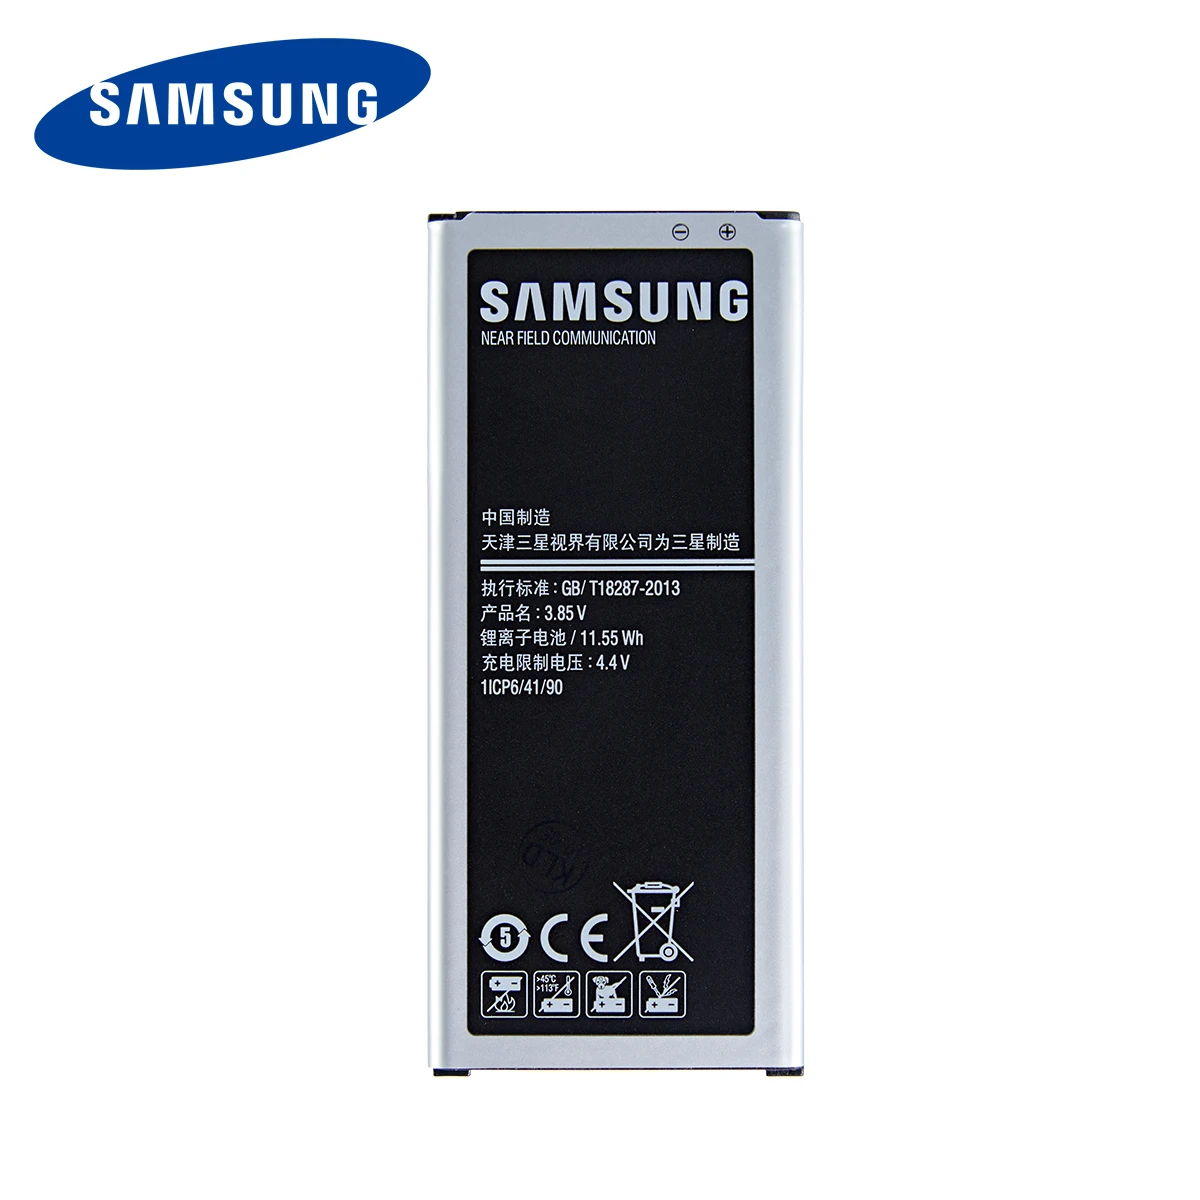 SAMSUNG Originalus EB-BN915BBC EB-BN915BBE 3000mAh baterija Samsung 